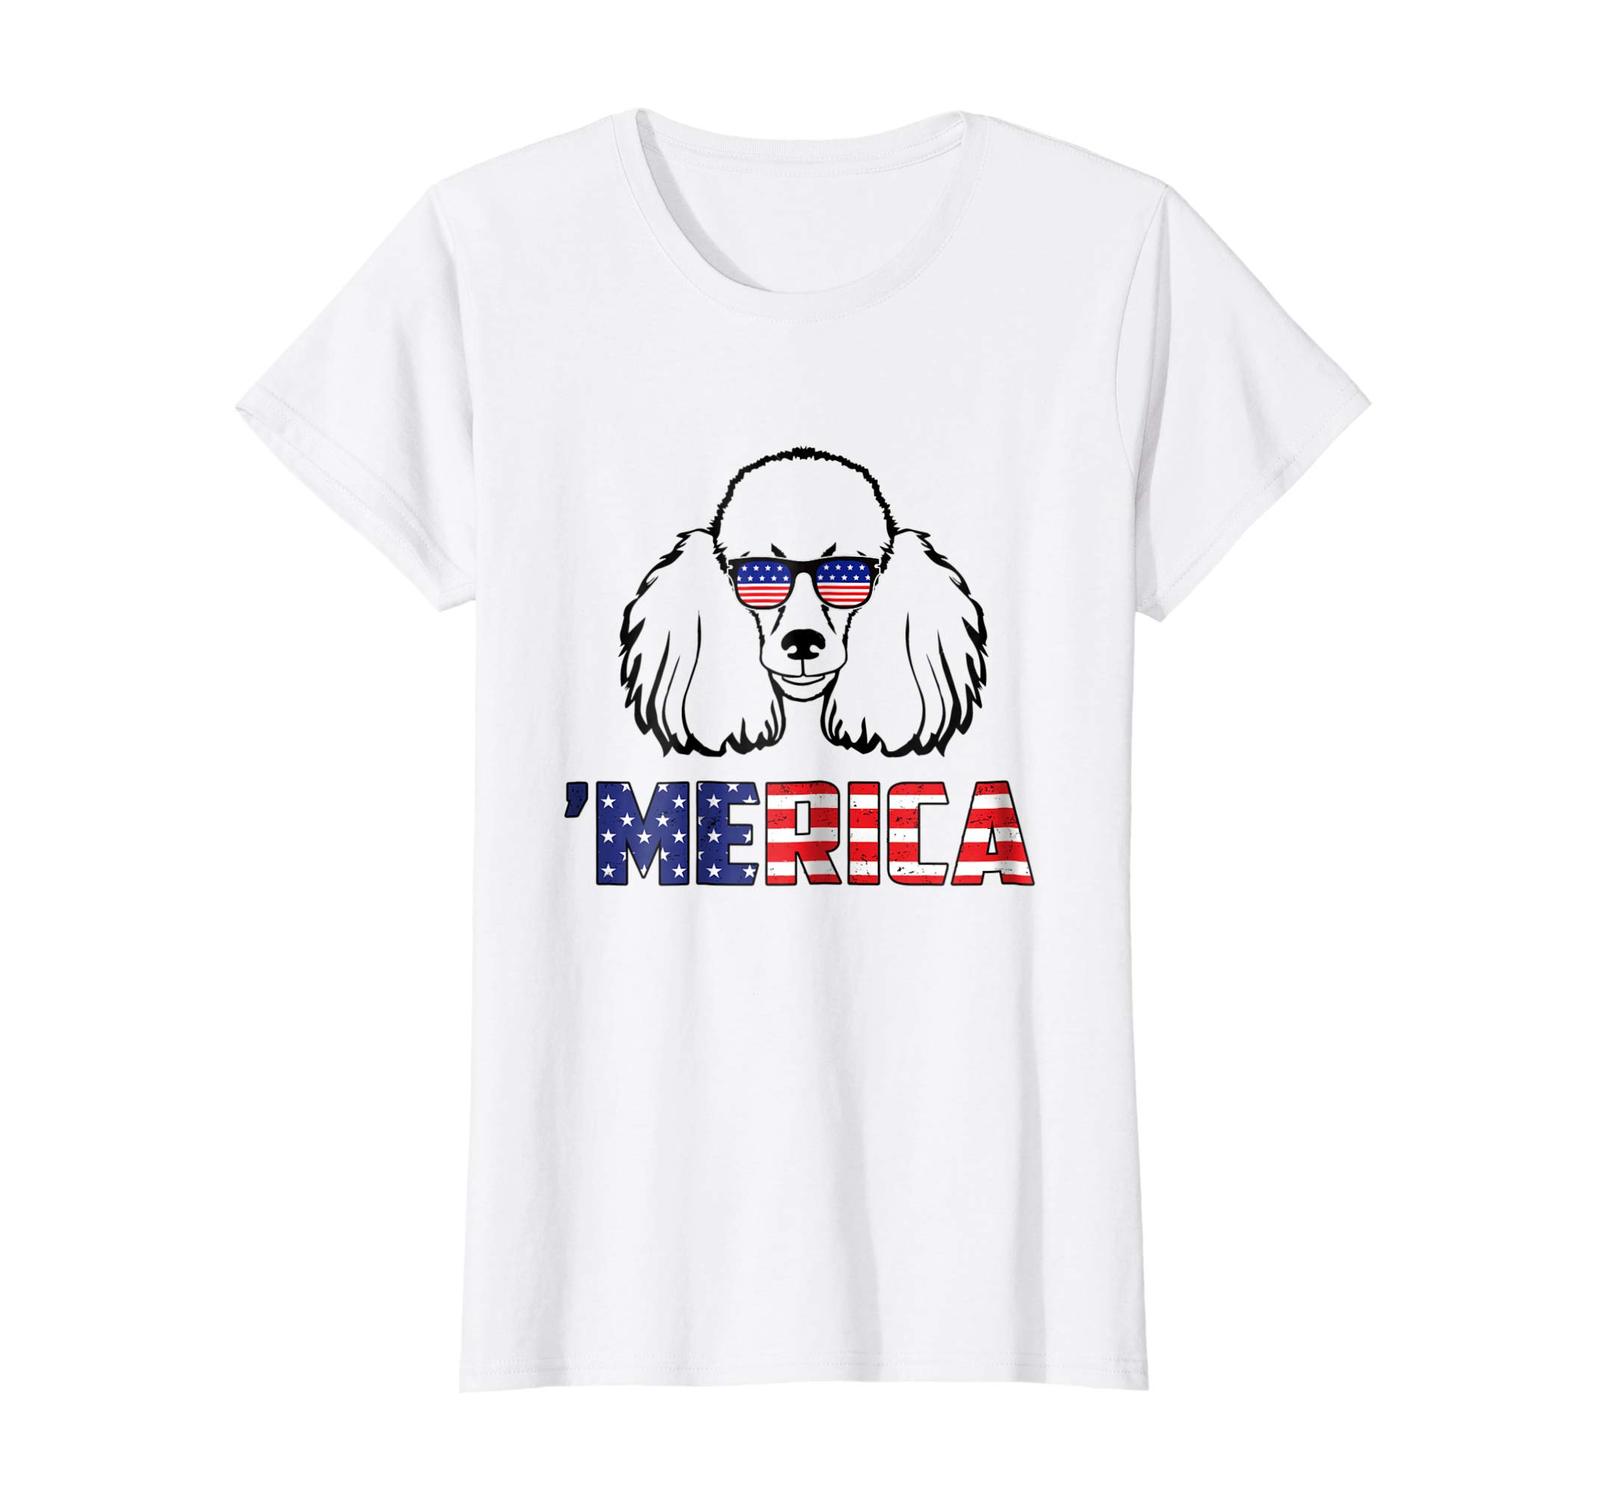 Dog Fashion - Patriotic Poodle Dog Merica T-Shirt 4th of july Wowen